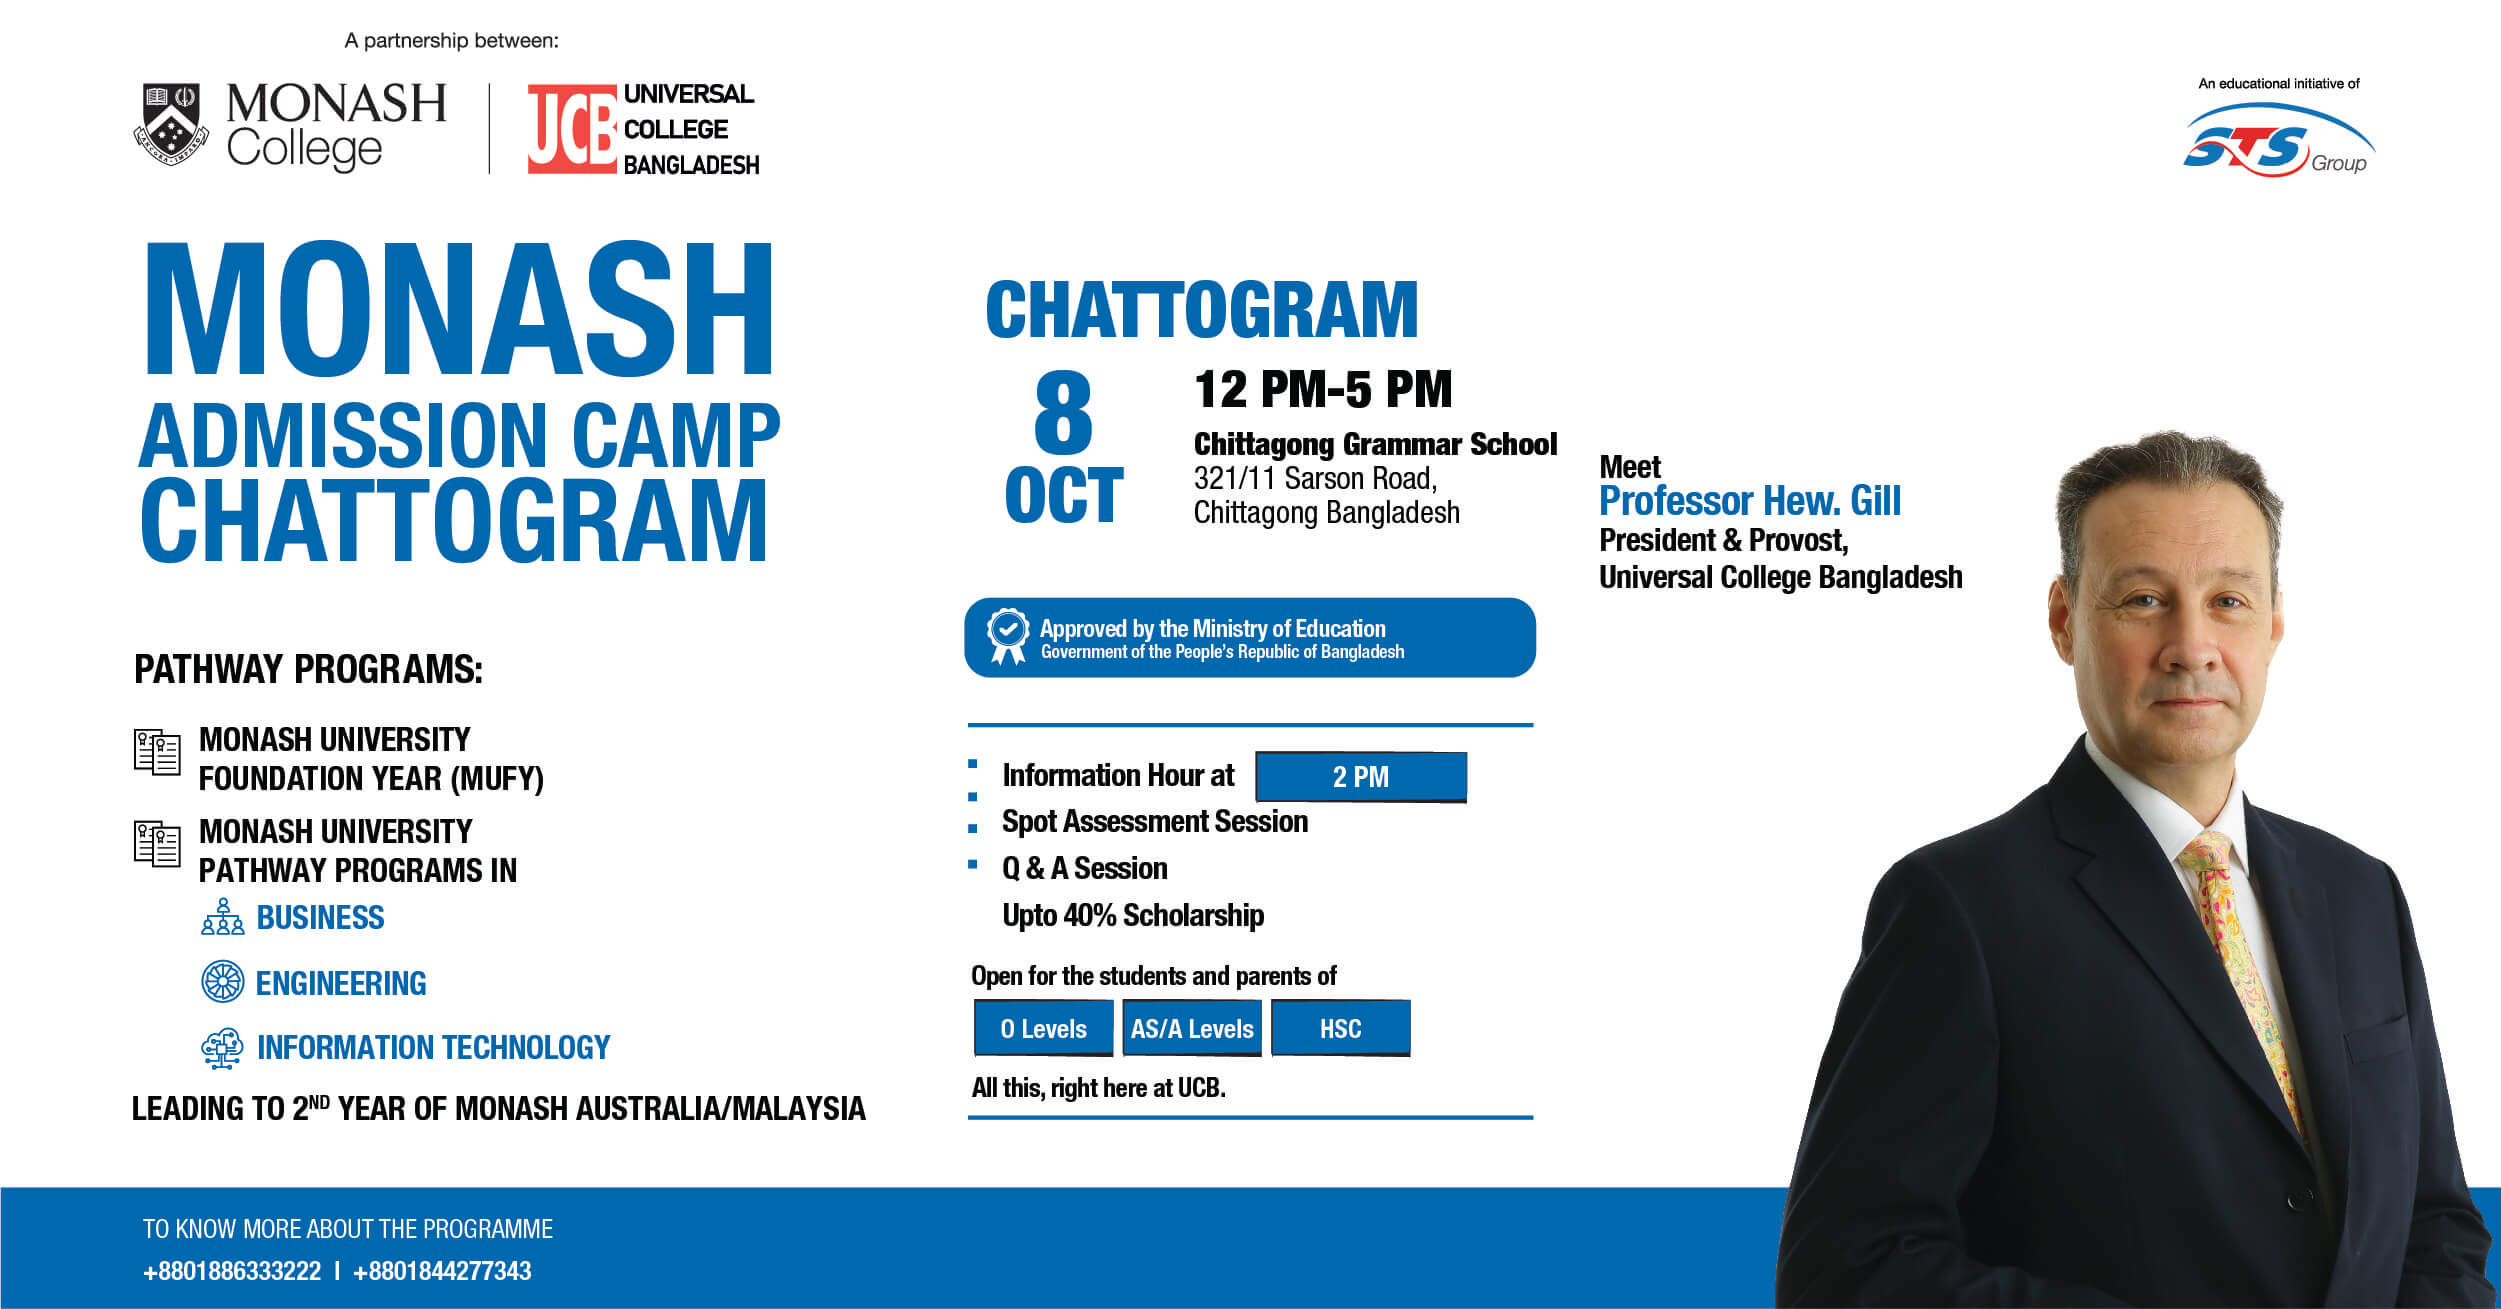 Monash Admission Camp Chattogram